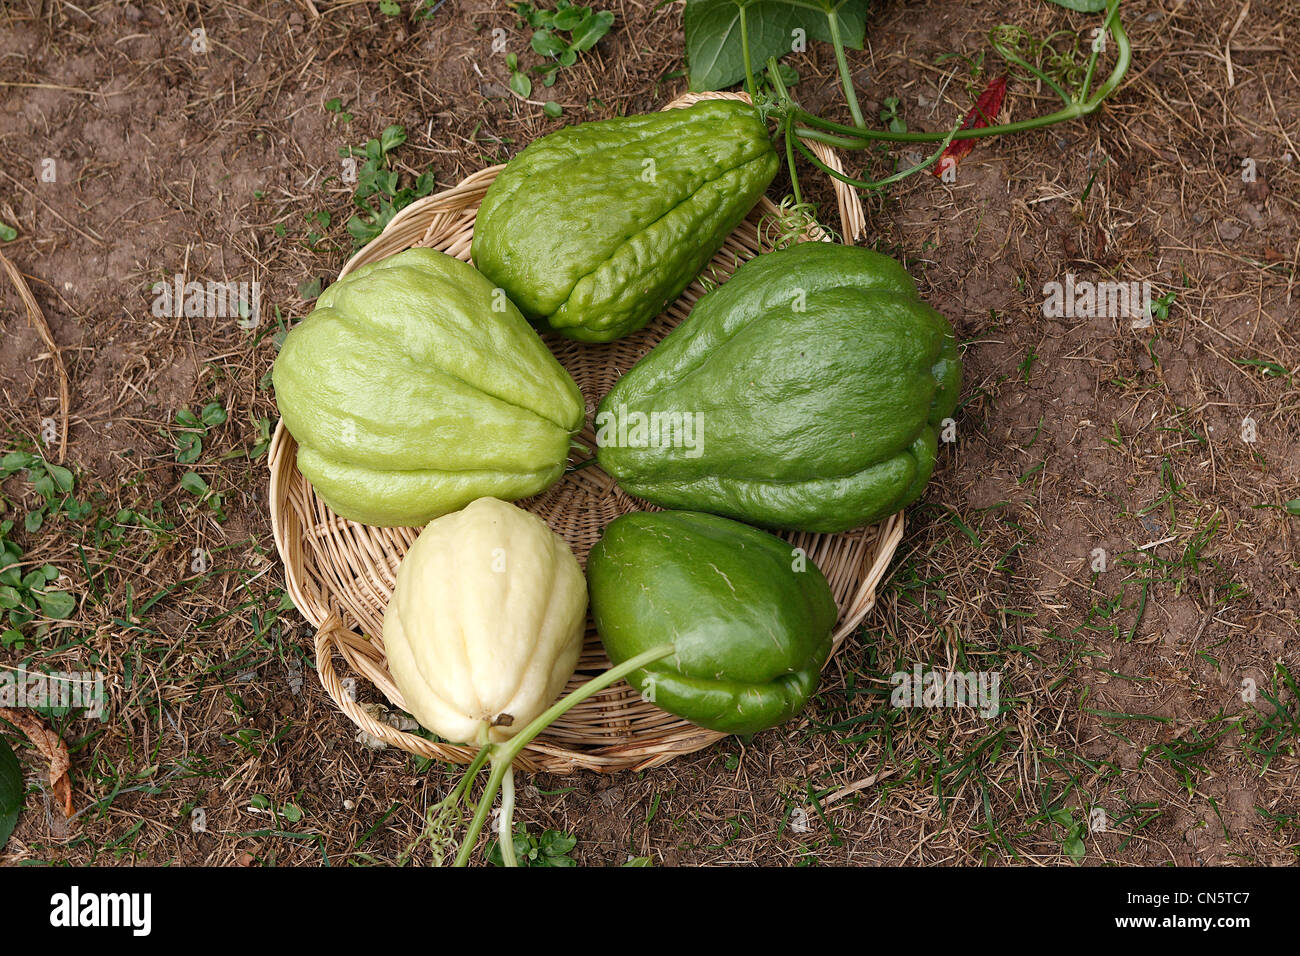 France, Bas Rhin, Chayote (Sechium edule), tropical fruit eat as a vegetable of family Cucurbitaceae Stock Photo